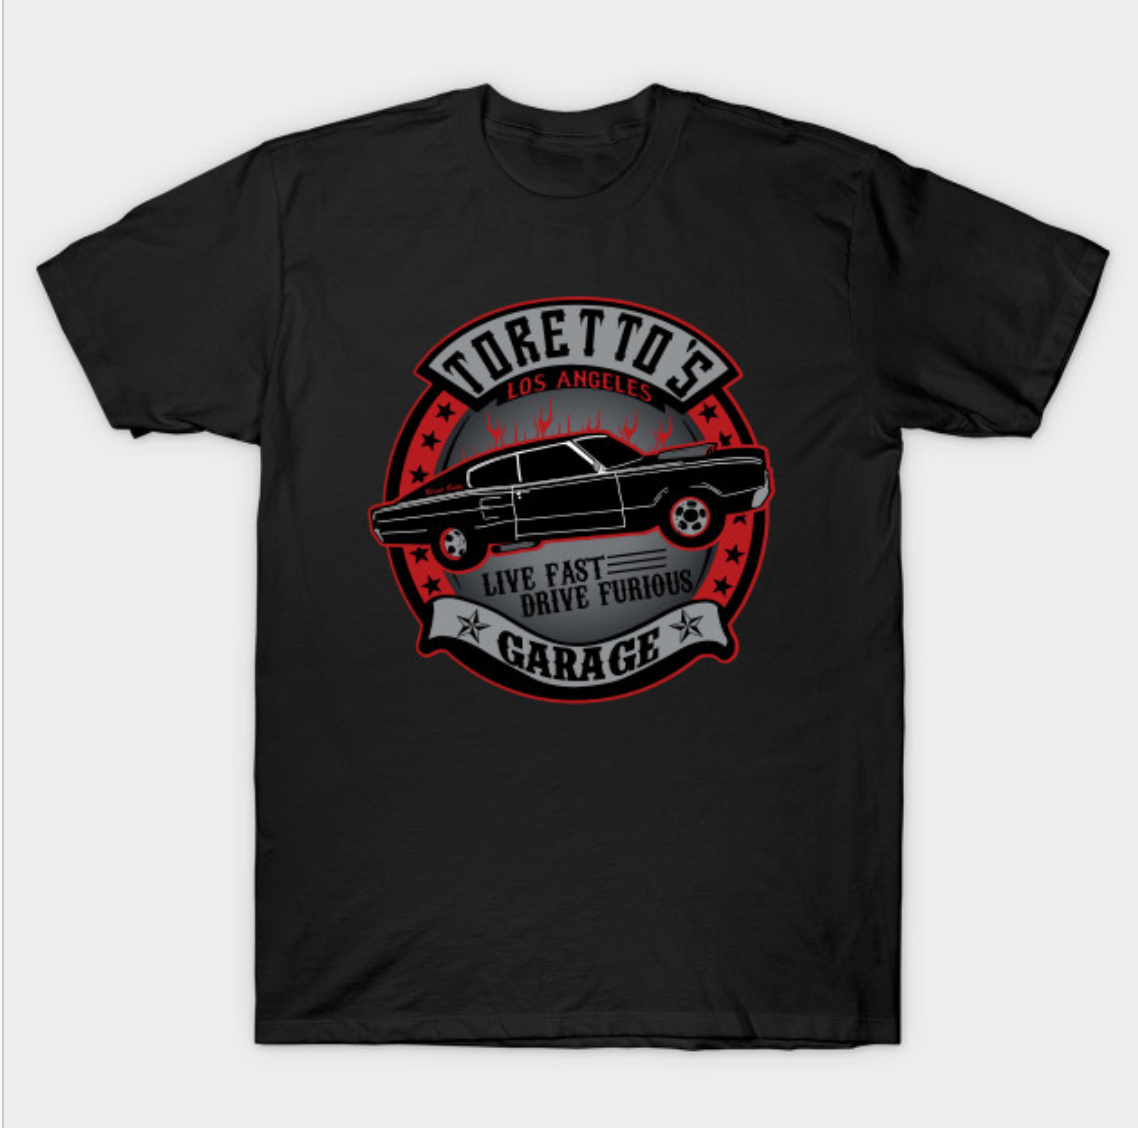 Toretto’s Garage T-Shirt by buby87 via TeePublic.